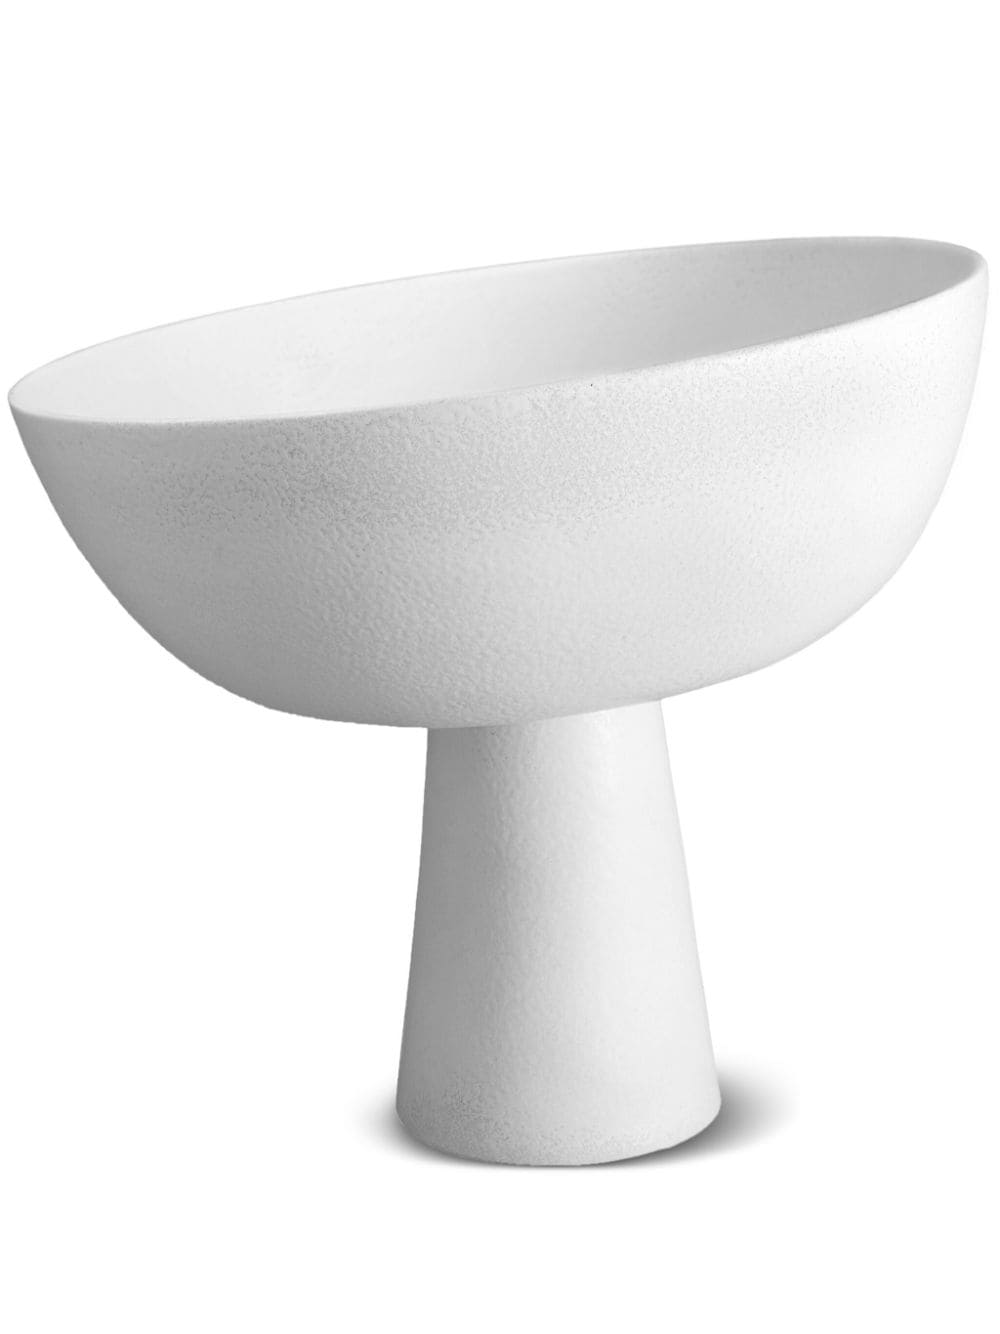 L'Objet medium Terra porcelain bowl - Neutrals von L'Objet